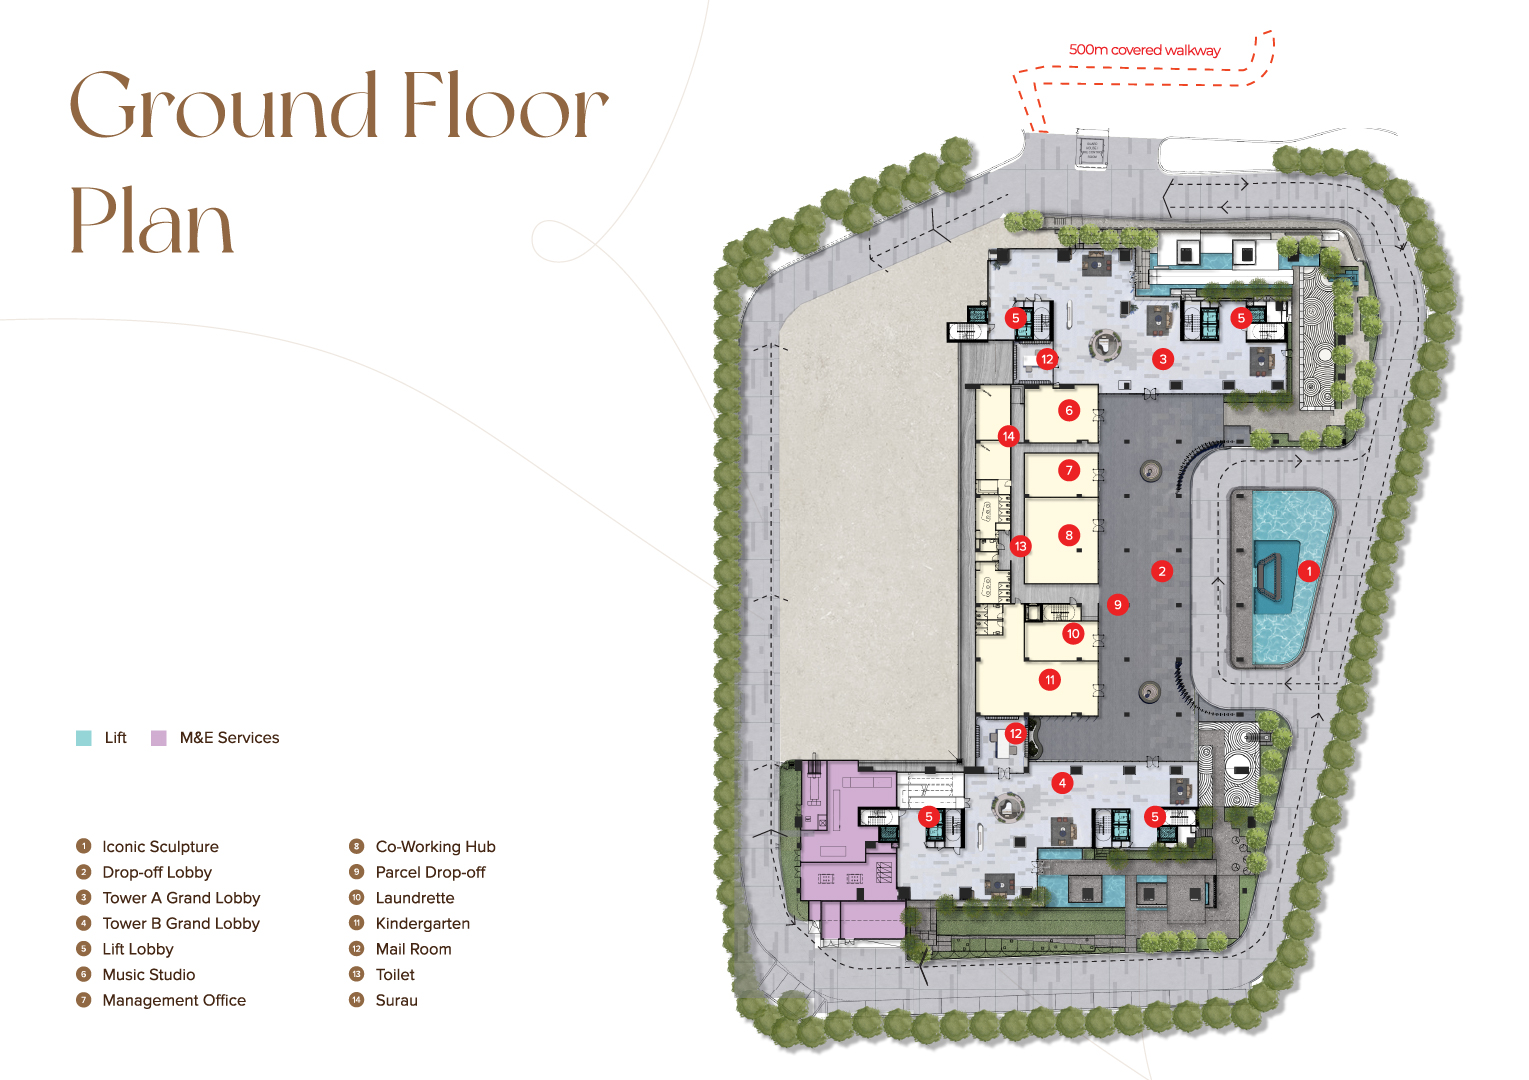 Ground Floor Plan, Facilities, Amber Homes, Sri Petaling